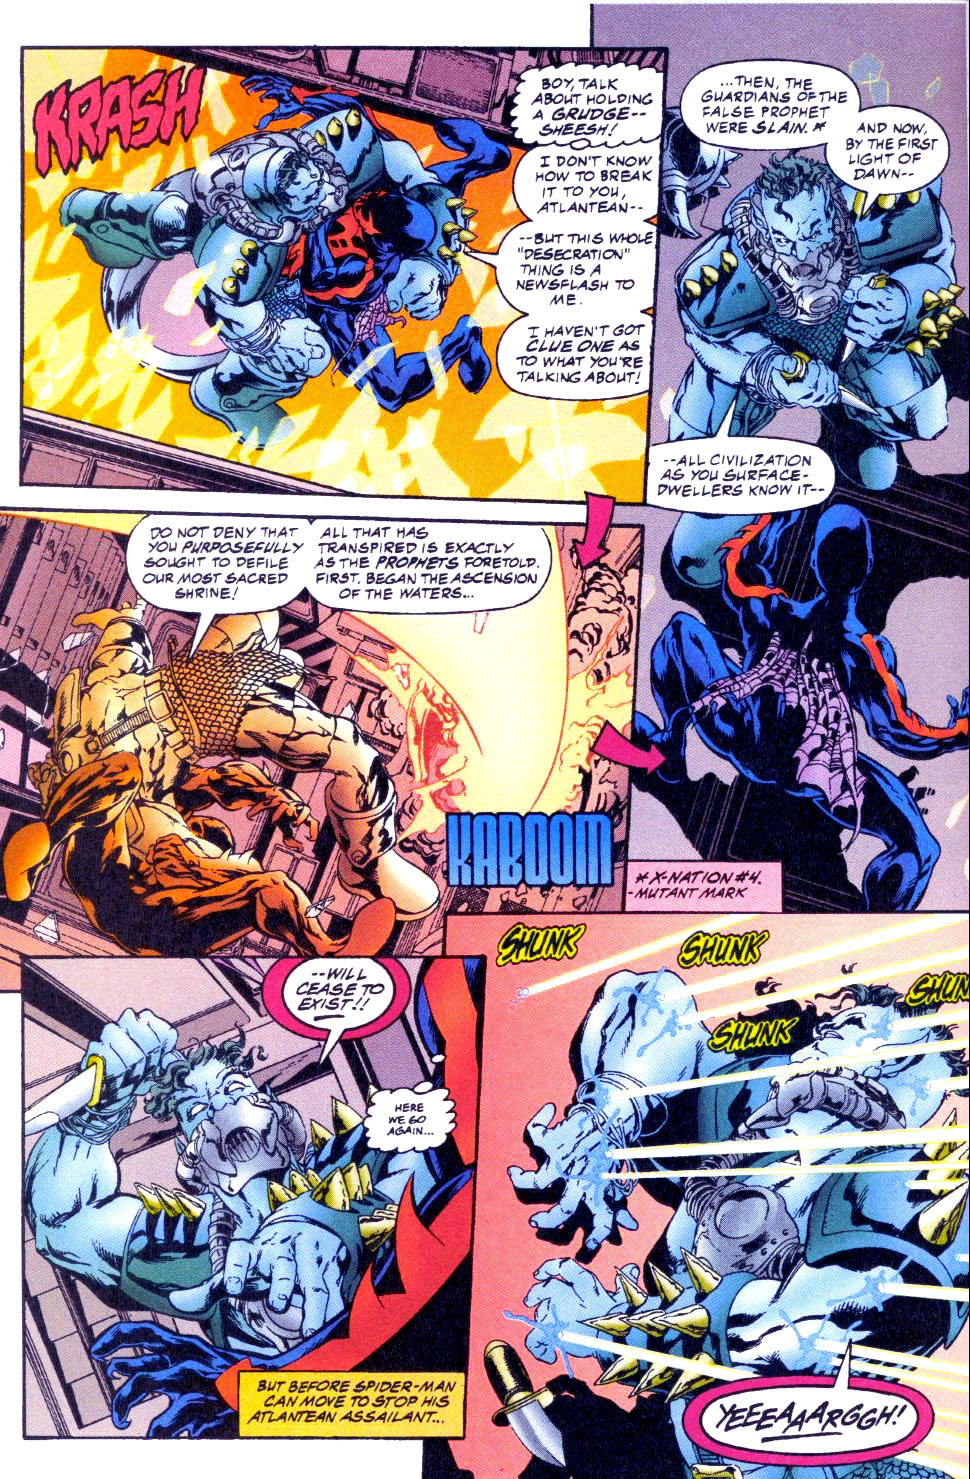 Spider-Man 2099 (1992) issue 46 - Page 6